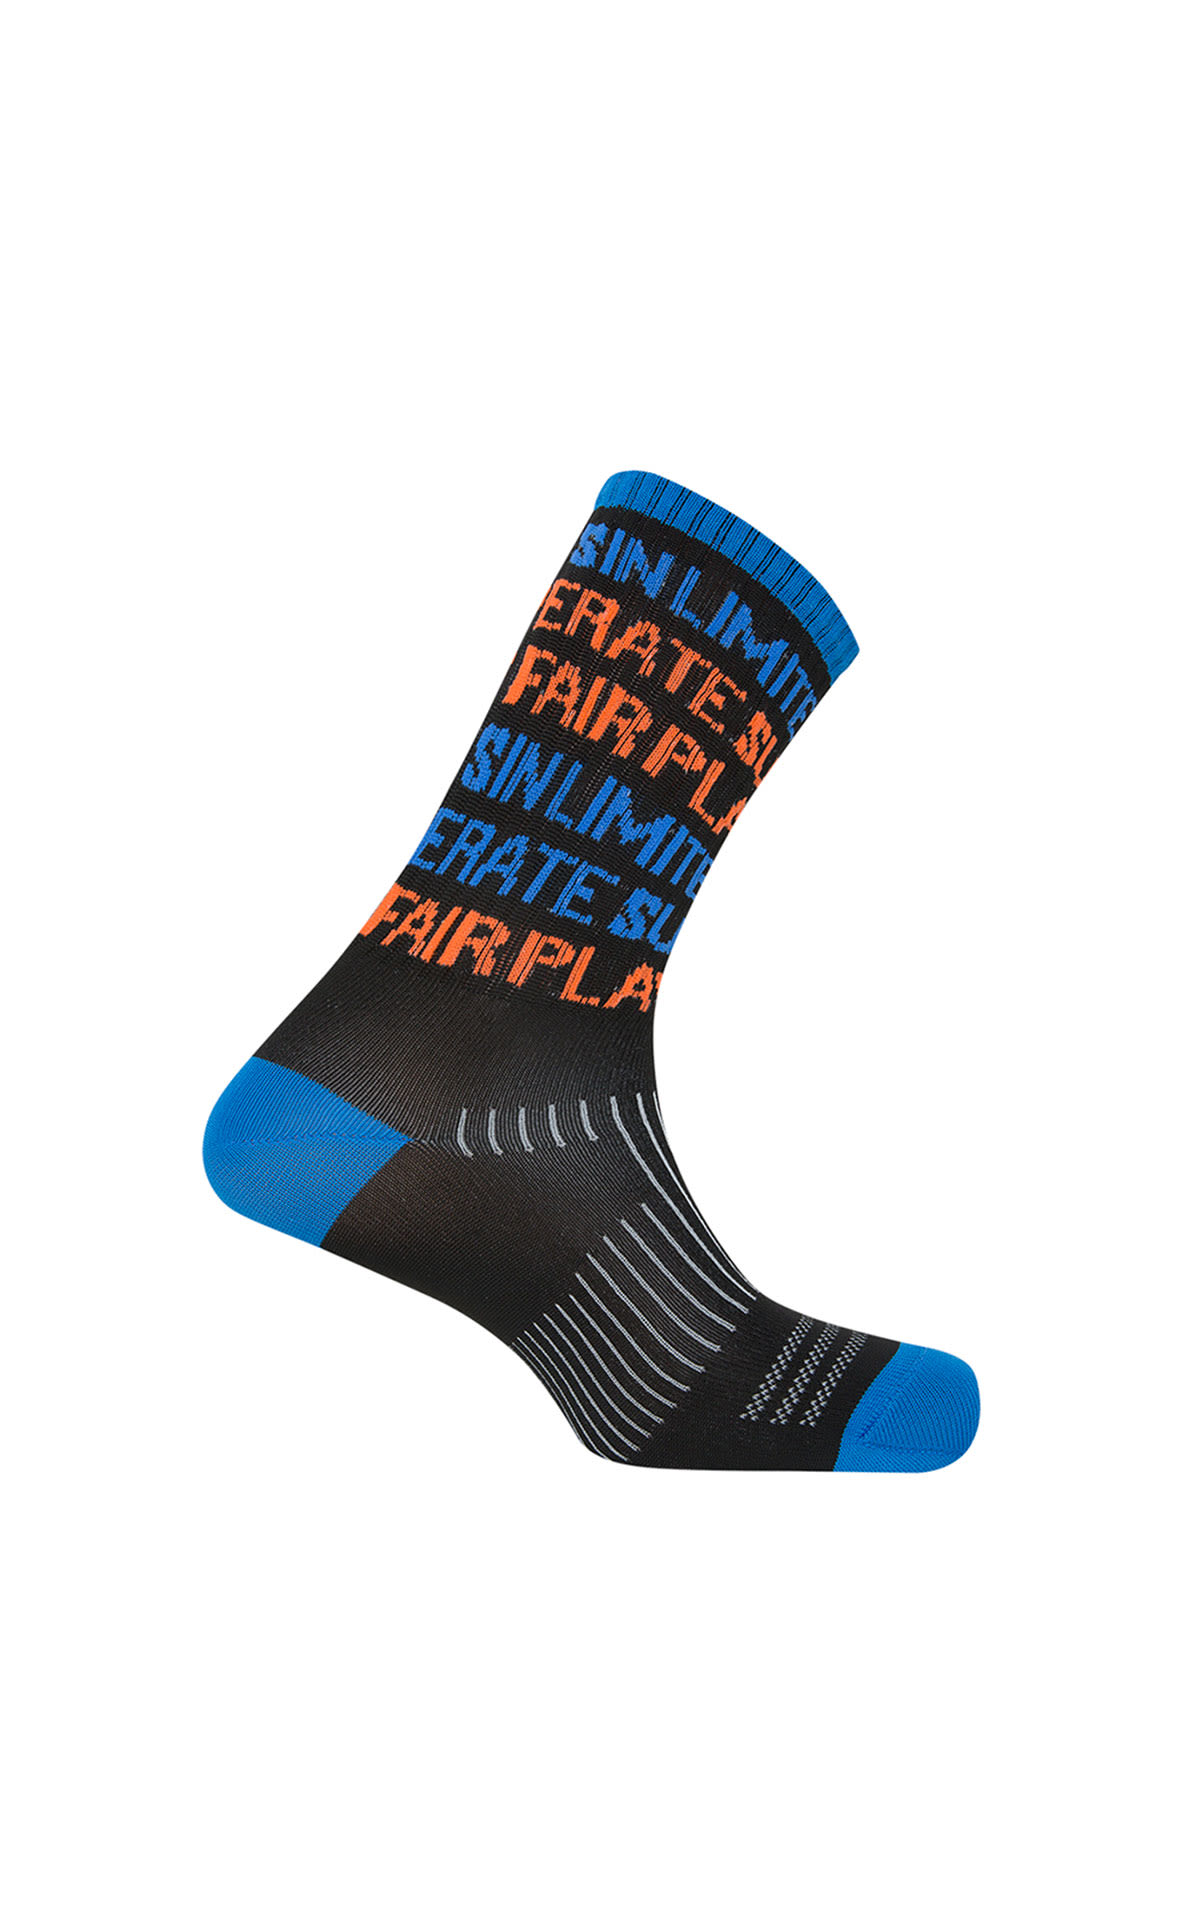 Black sock with blue and orange sports details Punto Blanco